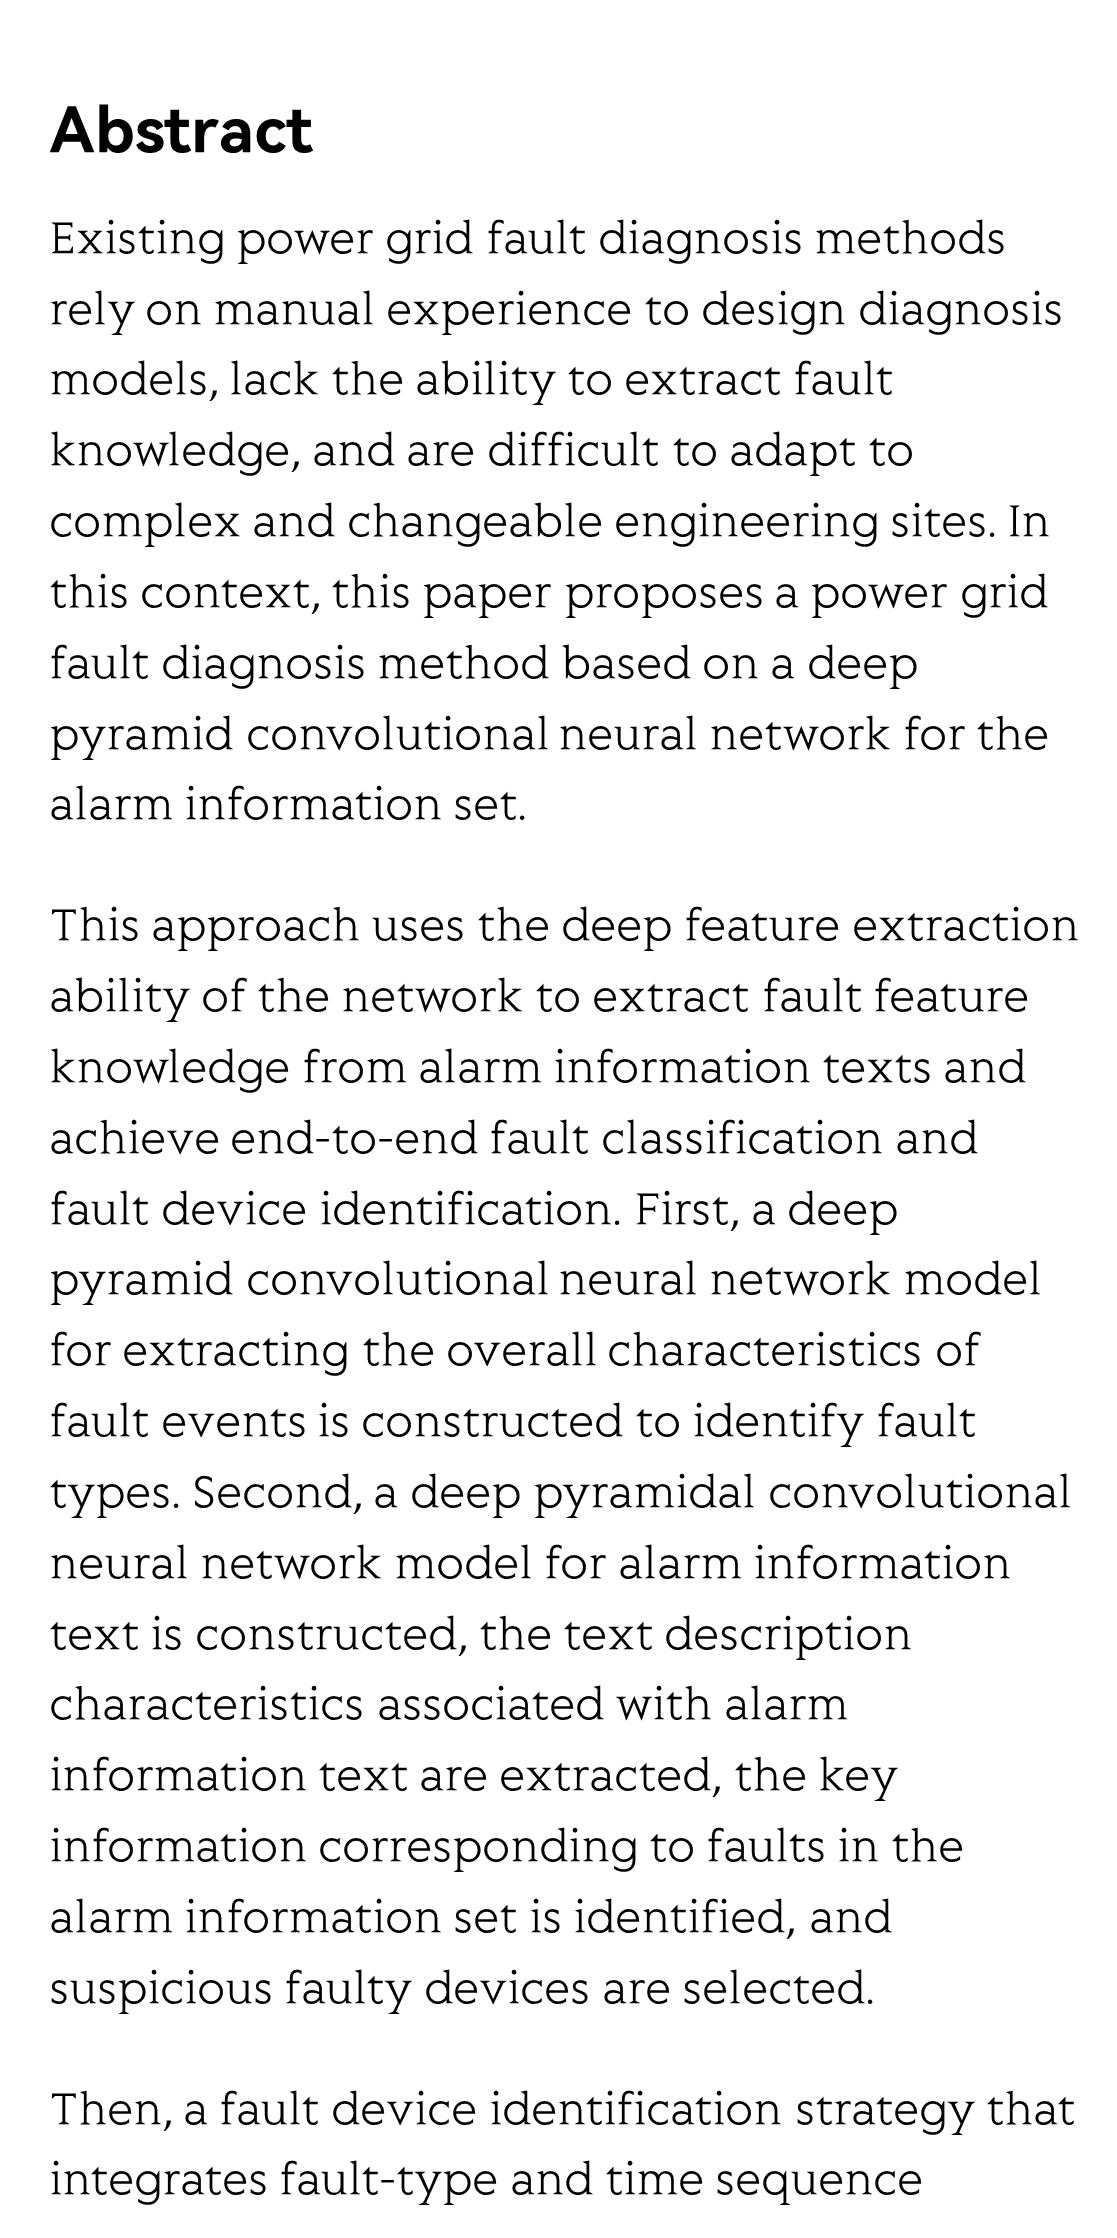 Power grid fault diagnosis based on a deep pyramid convolutional neural network_2